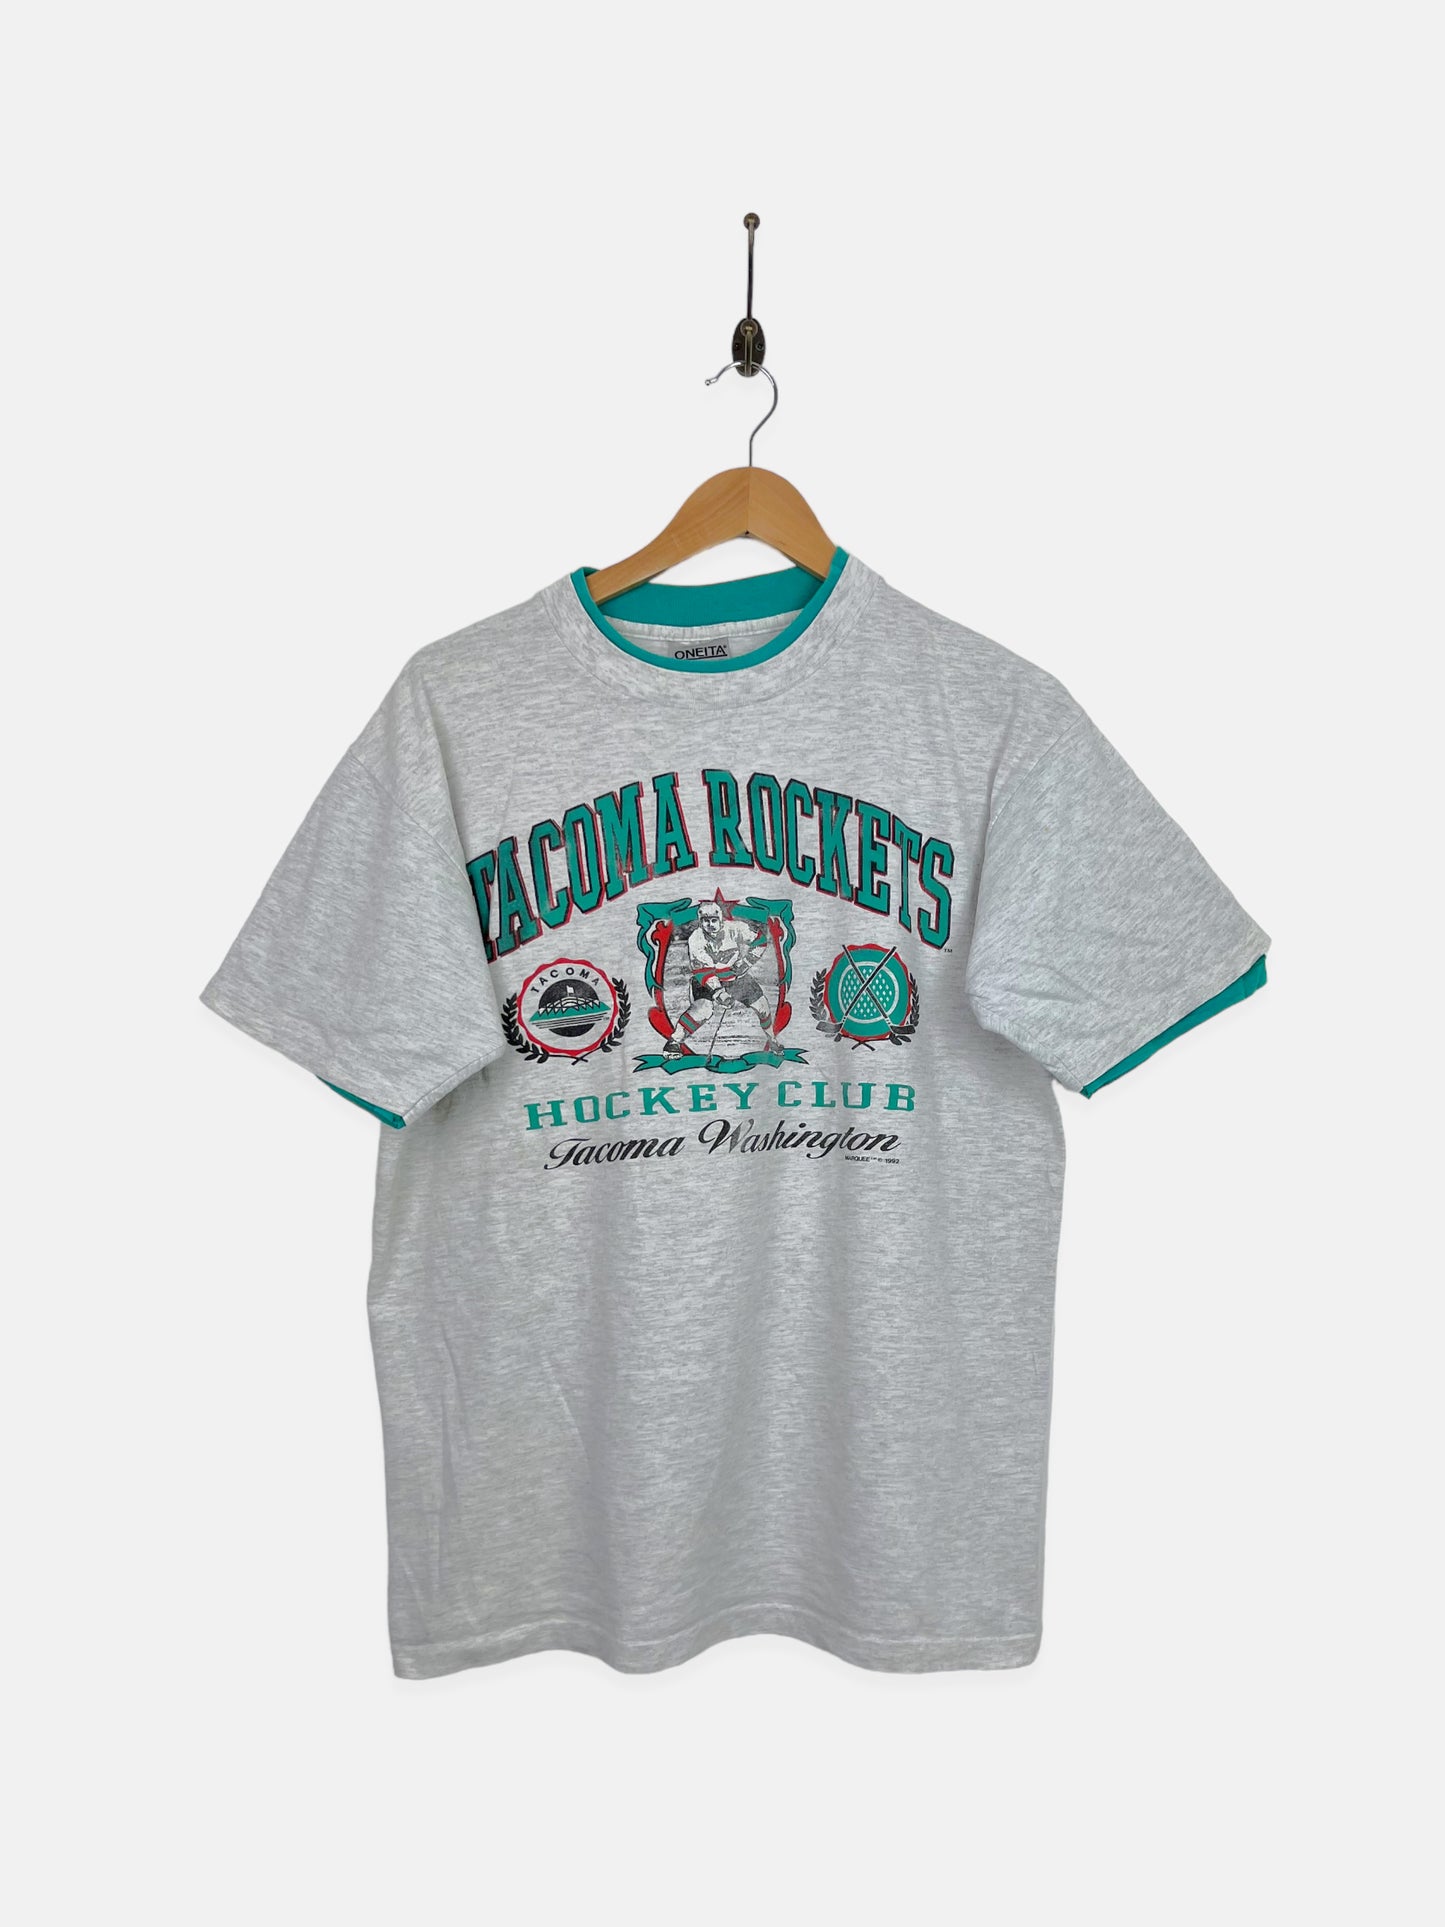 1992 Tacoma Rockets WHL USA Made Vintage T-Shirt Size 10-12